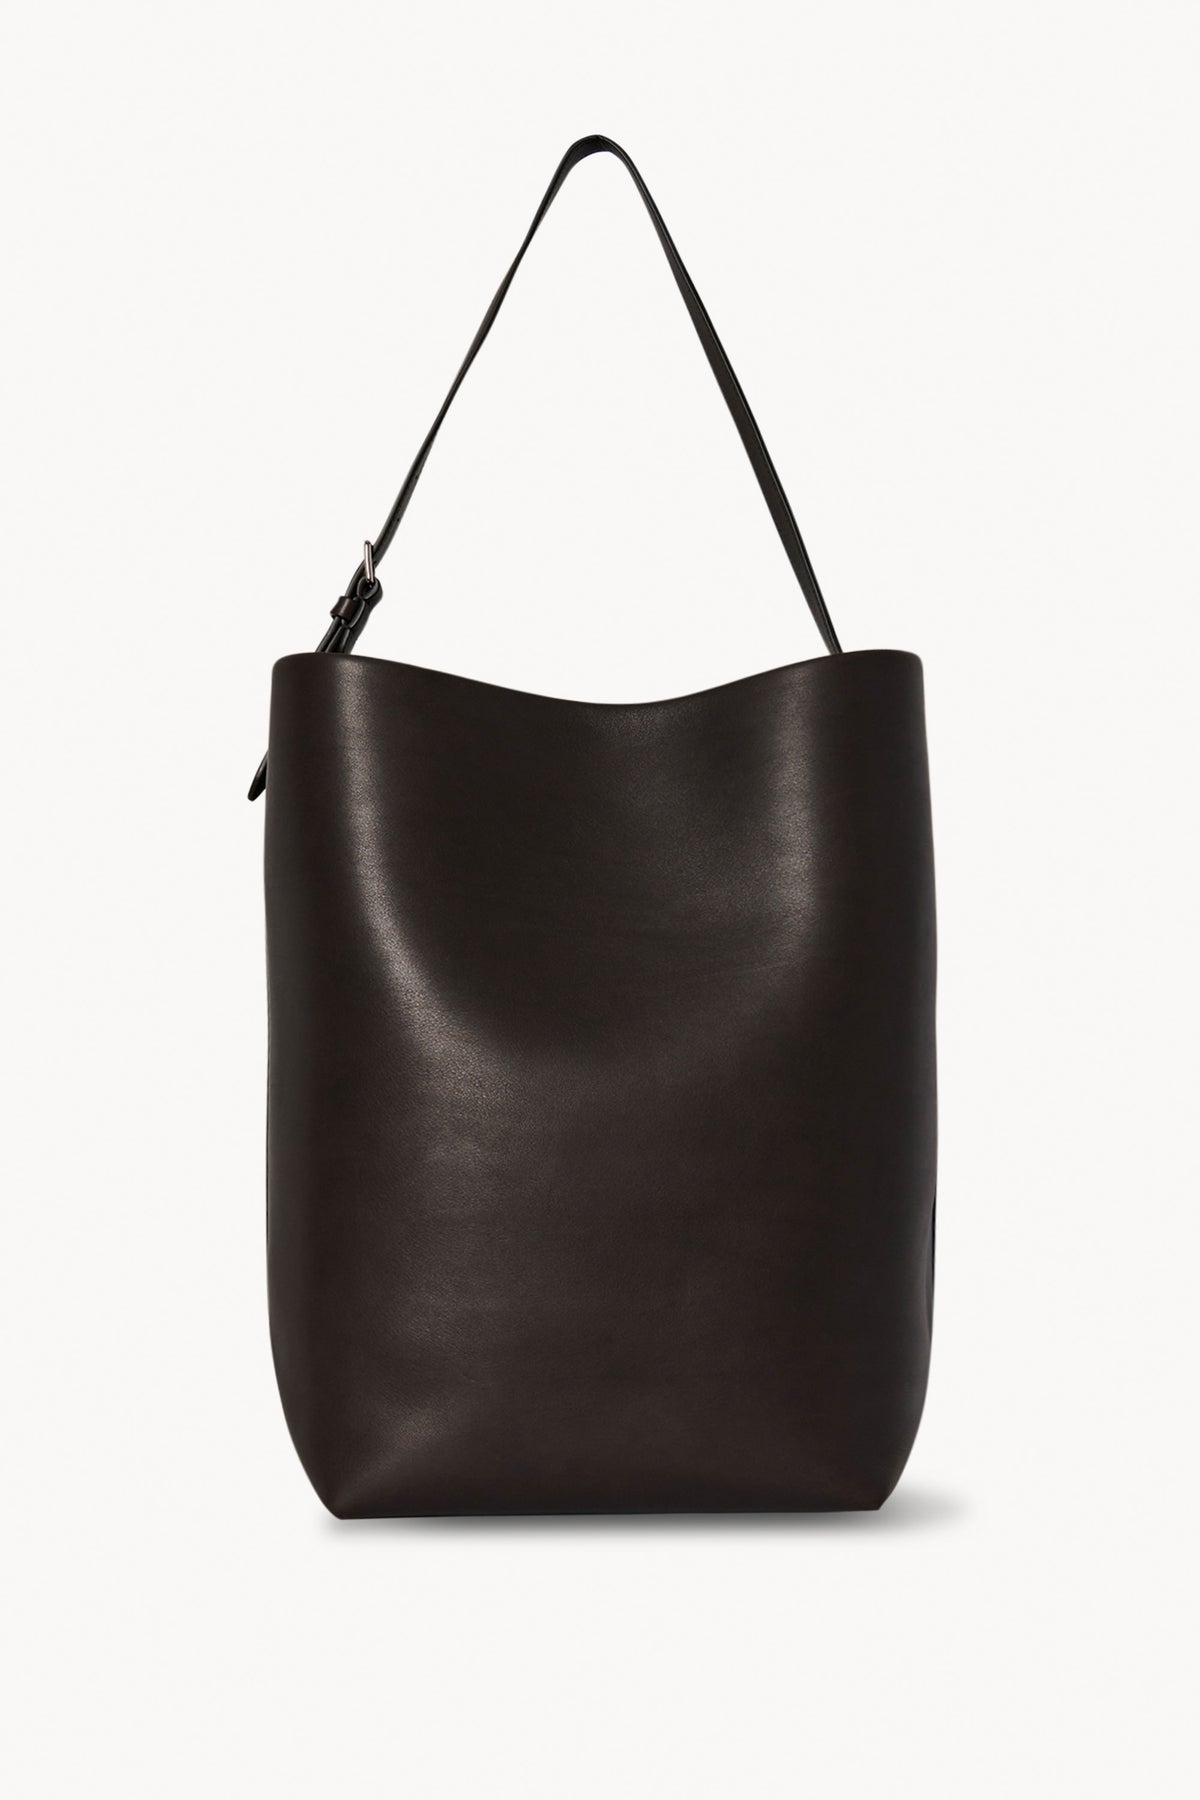 Michael Kors Sloan large Shoulder Bag | My Style Hub